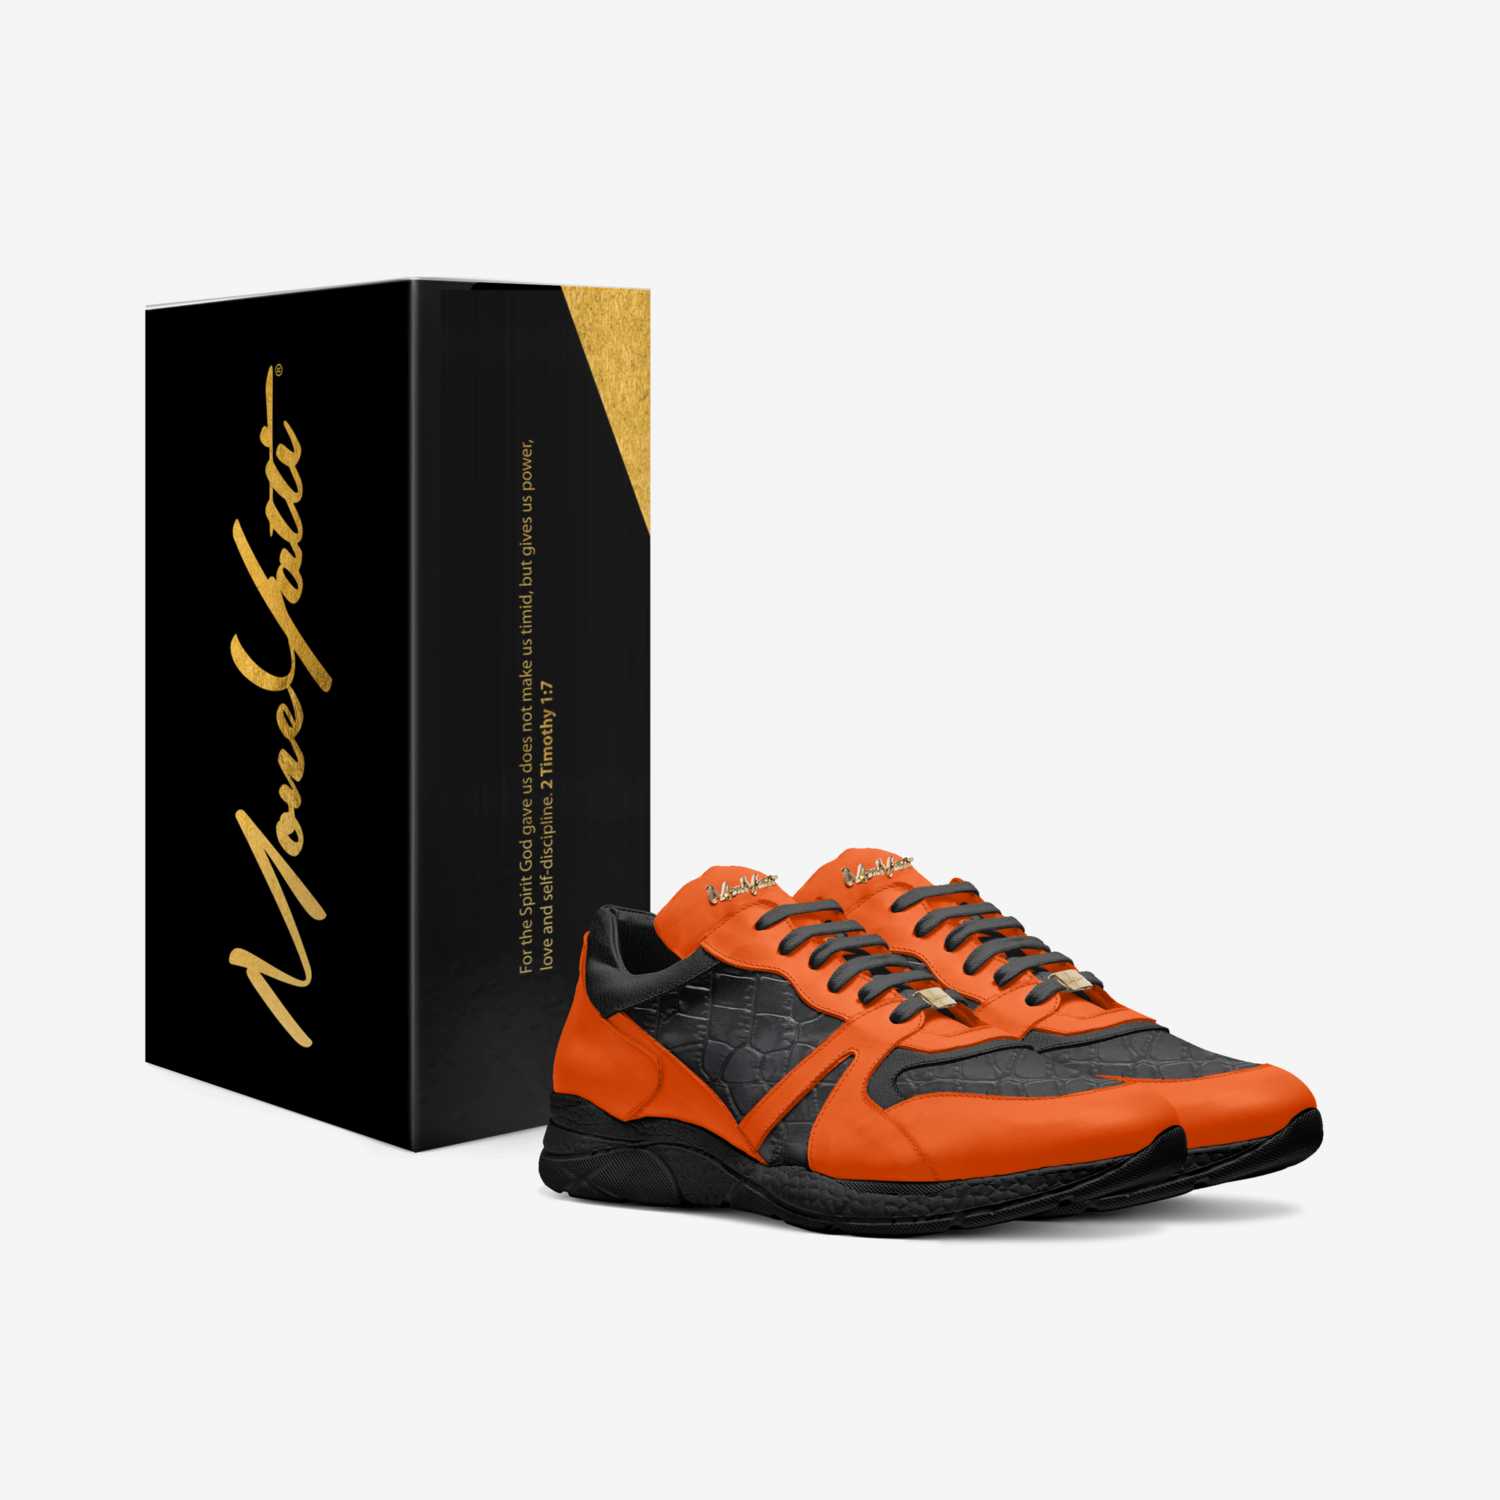 Moneyatti MP03 custom made in Italy shoes by Moneyatti Brand | Box view